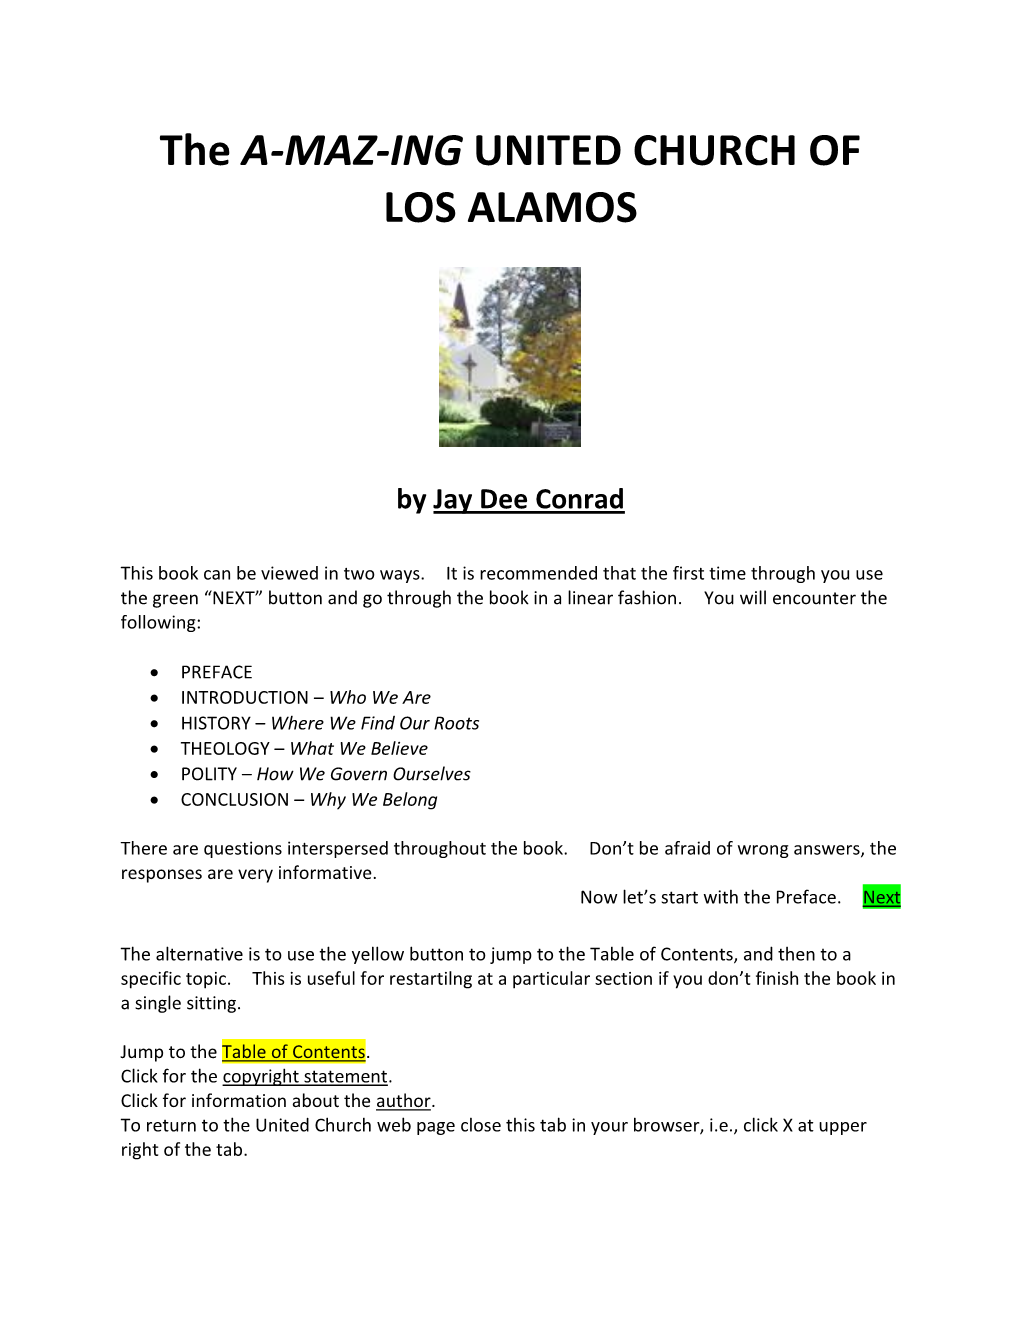 The A-MAZ-ING UNITED CHURCH of LOS ALAMOS